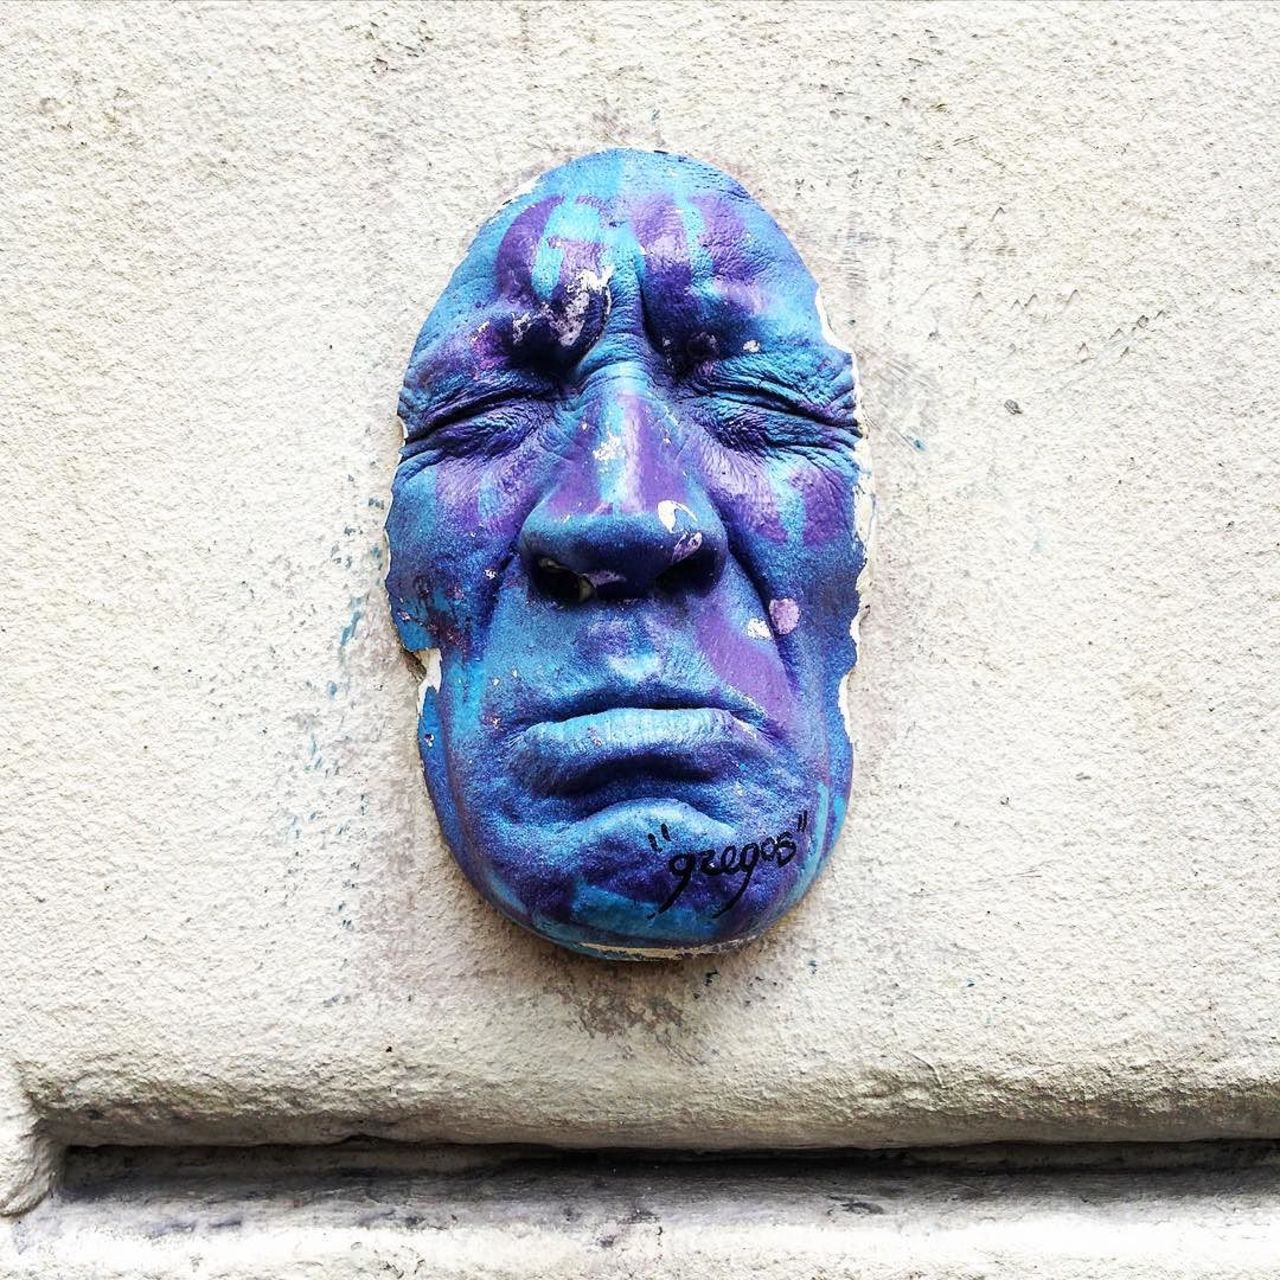 #Paris #graffiti photo by @julosteart http://ift.tt/1GZMz6t #StreetArt https://t.co/gZyfap0mEm